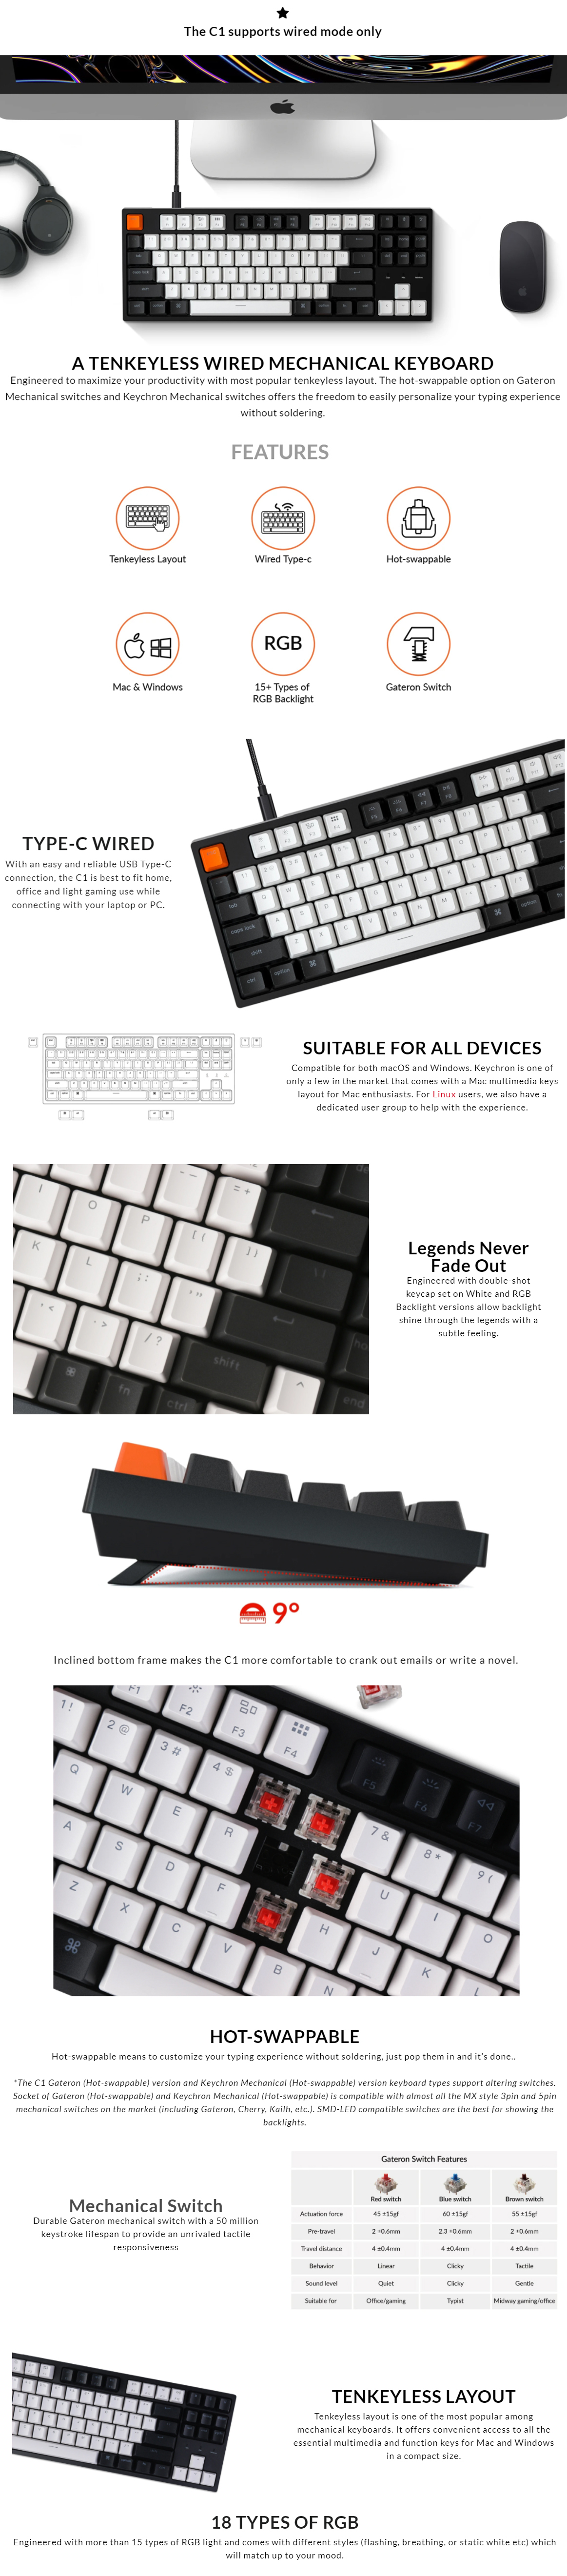 Keyboards-Keychron-C1-USB-Wired-Keyboard-Hot-Swappable-Gateron-RGB-Backlit-TKL-Mechanical-Keyboard-Brown-Switch-KBKCC1H3BROWN-1